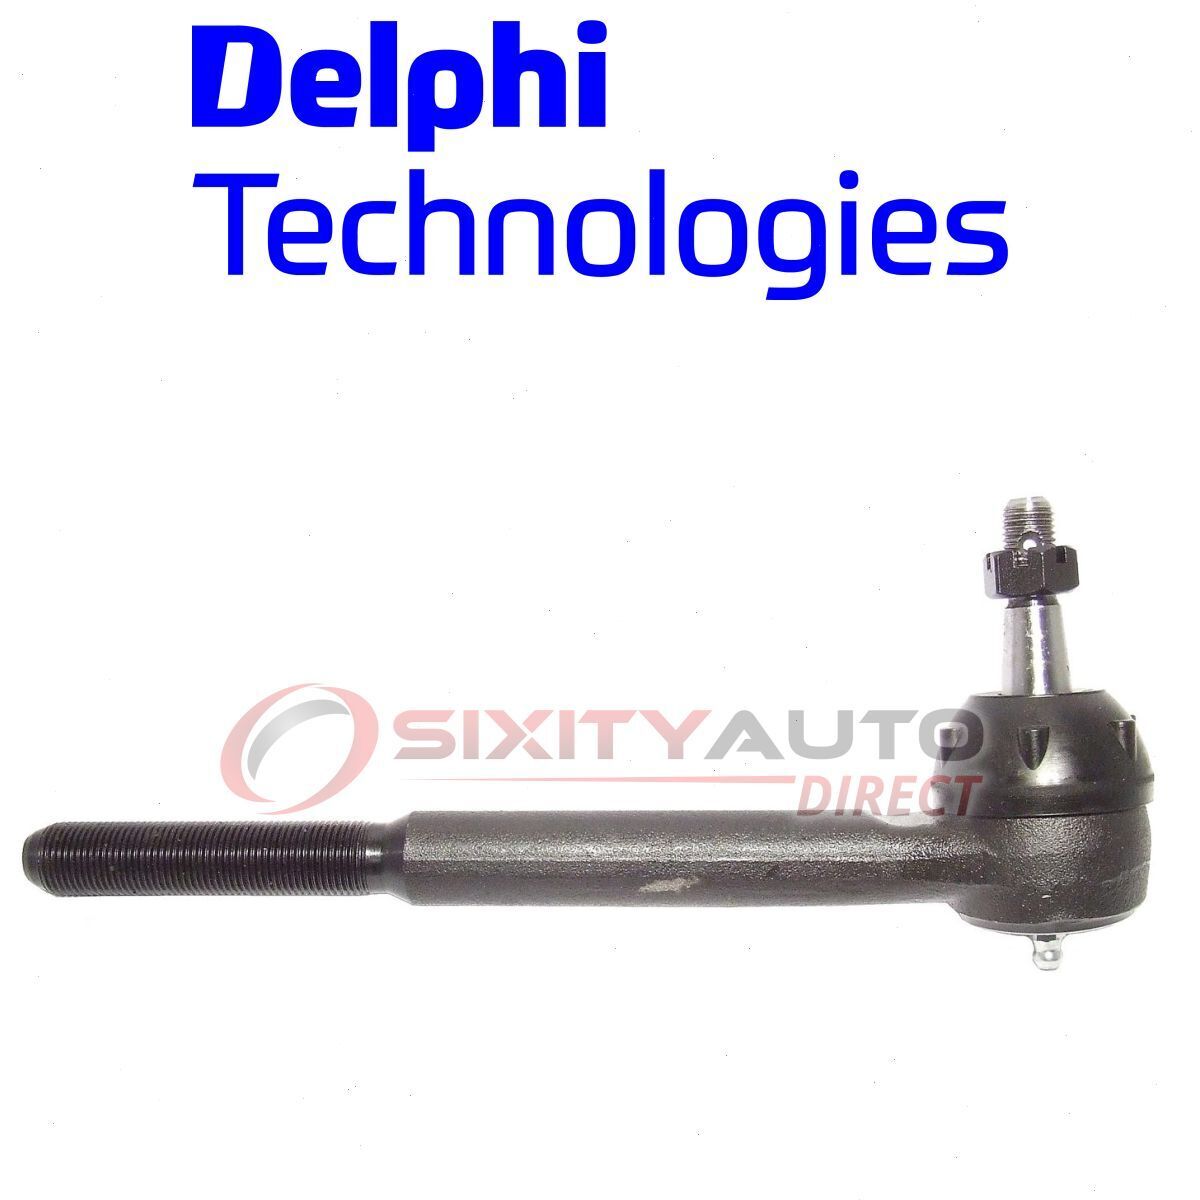 Delphi Outer Steering Tie Rod End for 1978-1987 Oldsmobile Cutlass Gear Rack ed